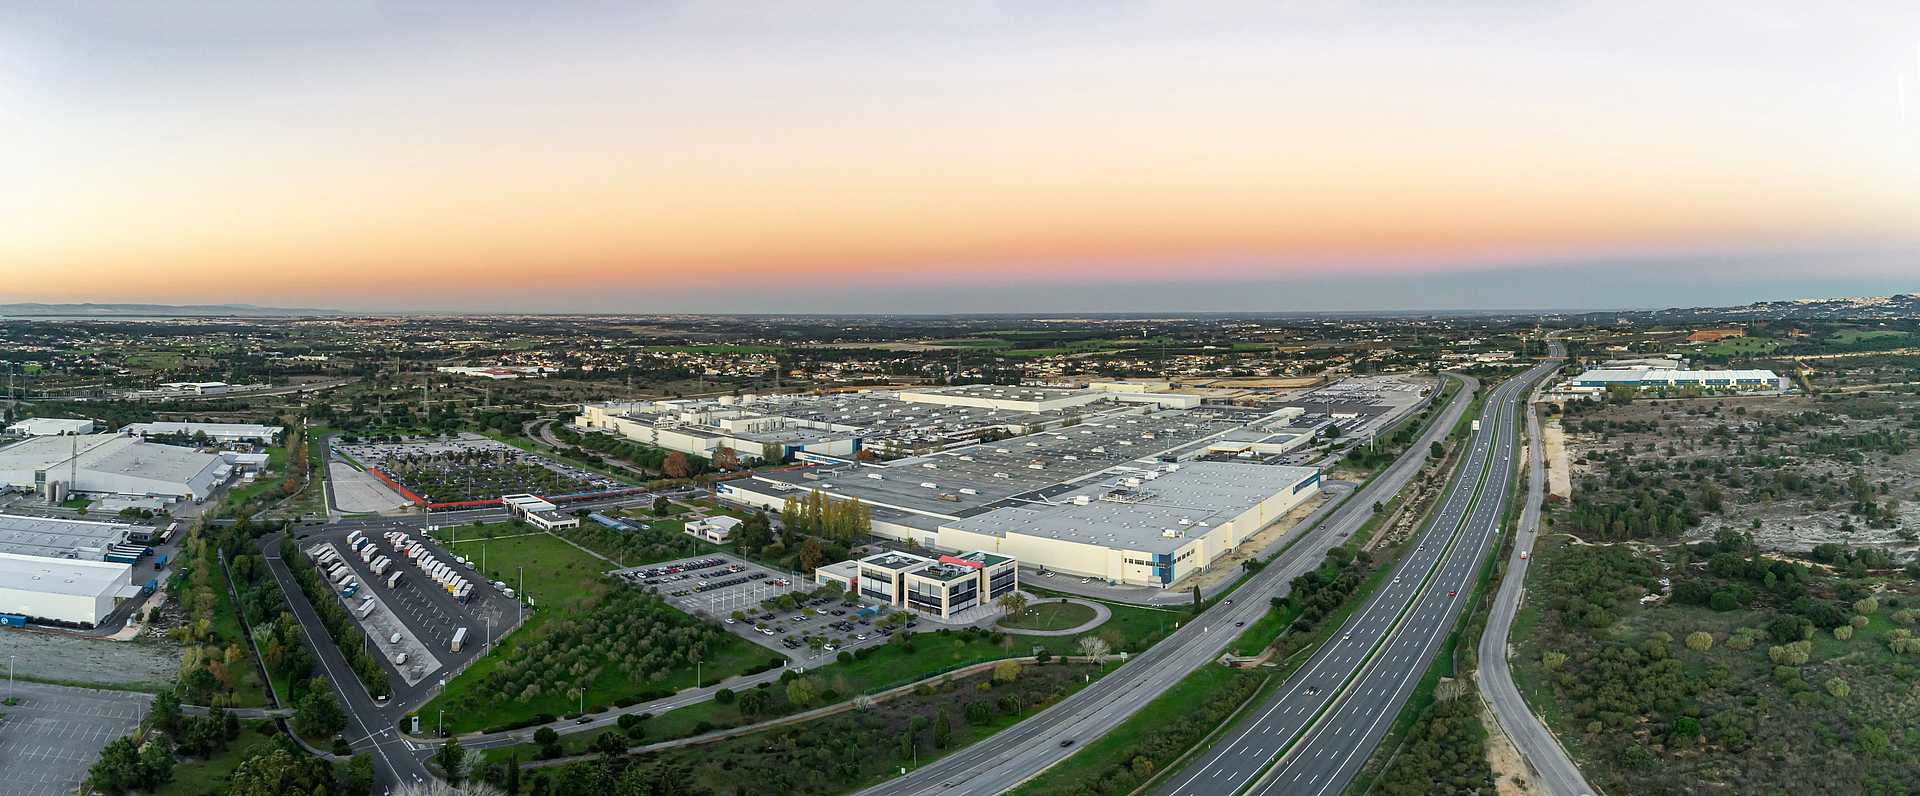 Panrama view of VW Autoeuropa plant, bird's eye view